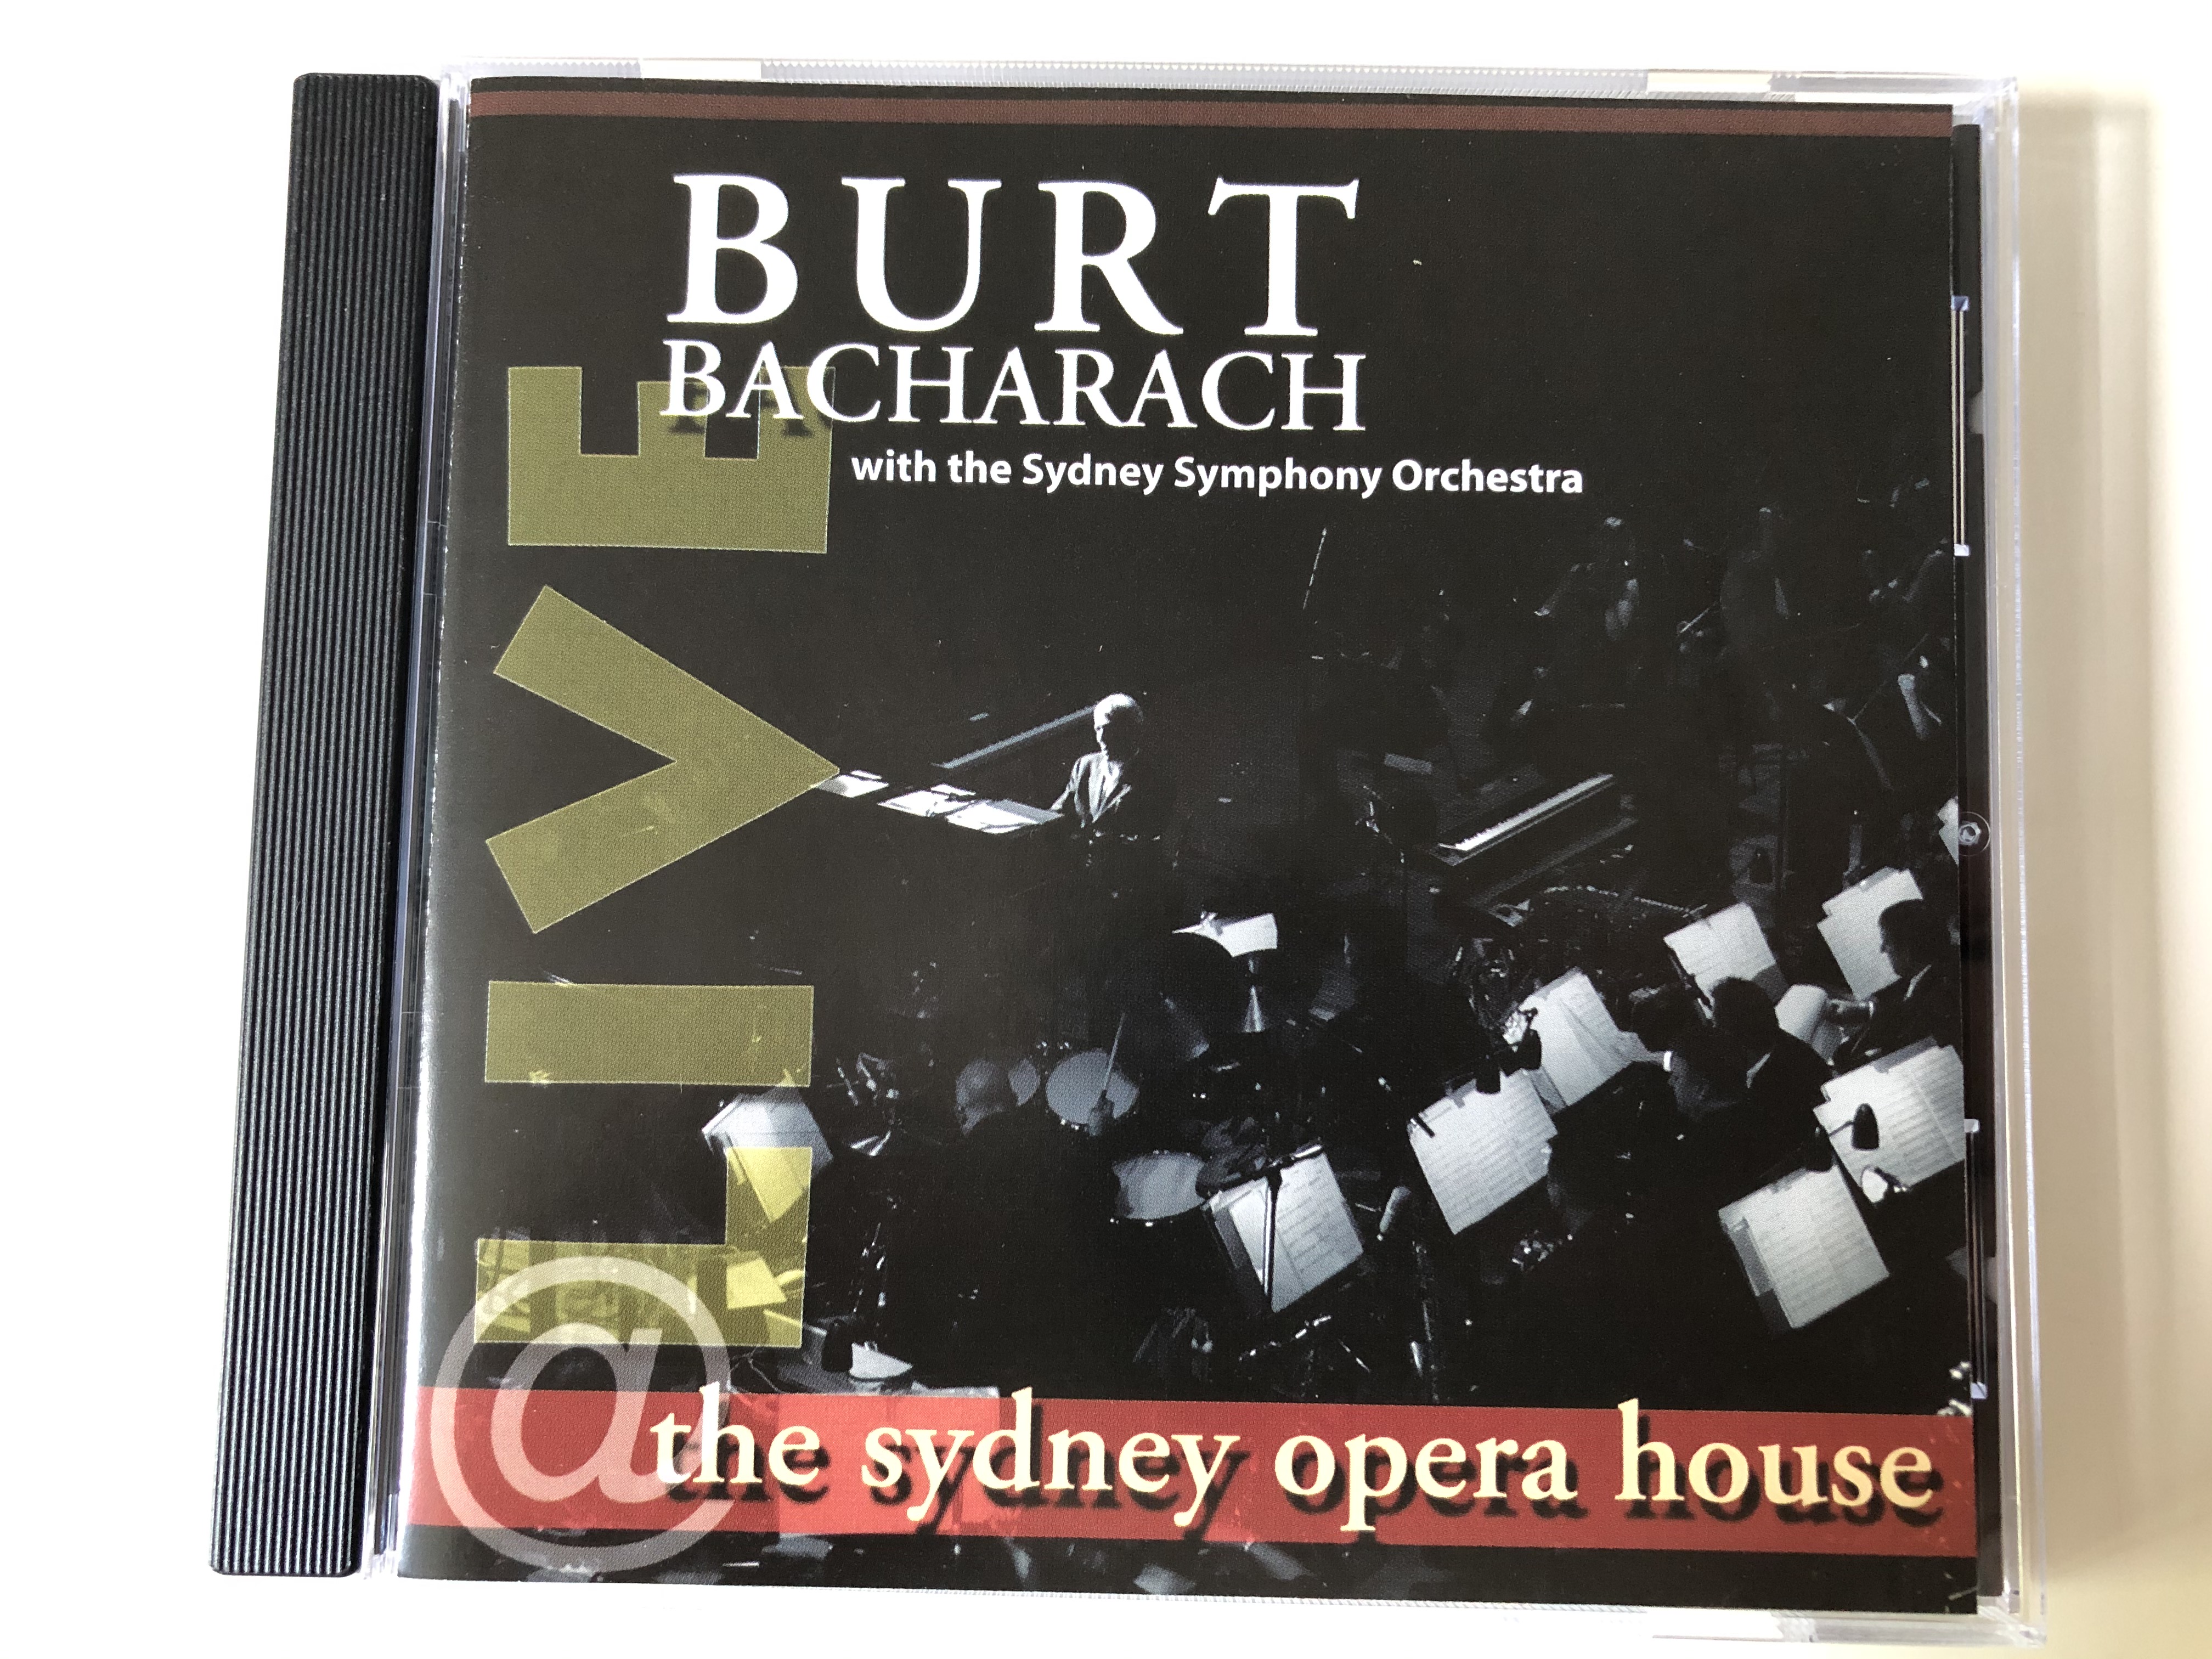 burt-bacharach-with-the-sydney-symphony-orchestra-live-at-the-sydney-opera-house-verve-records-audio-cd-2008-0602517872400-1-.jpg